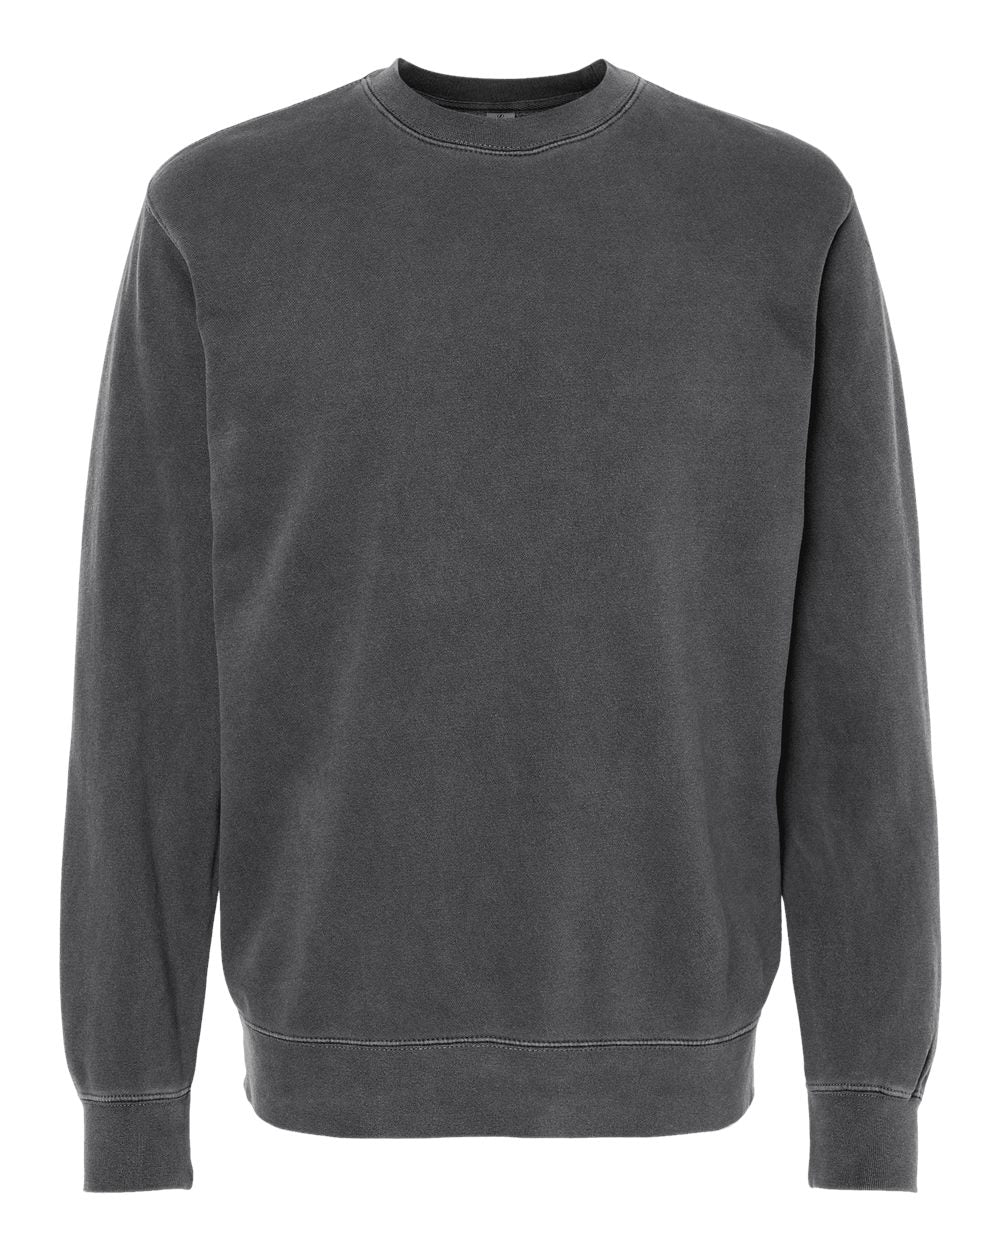 Independent Pigment-Dyed Crewneck Sweatshirt (PRM3500) in Pigment Black